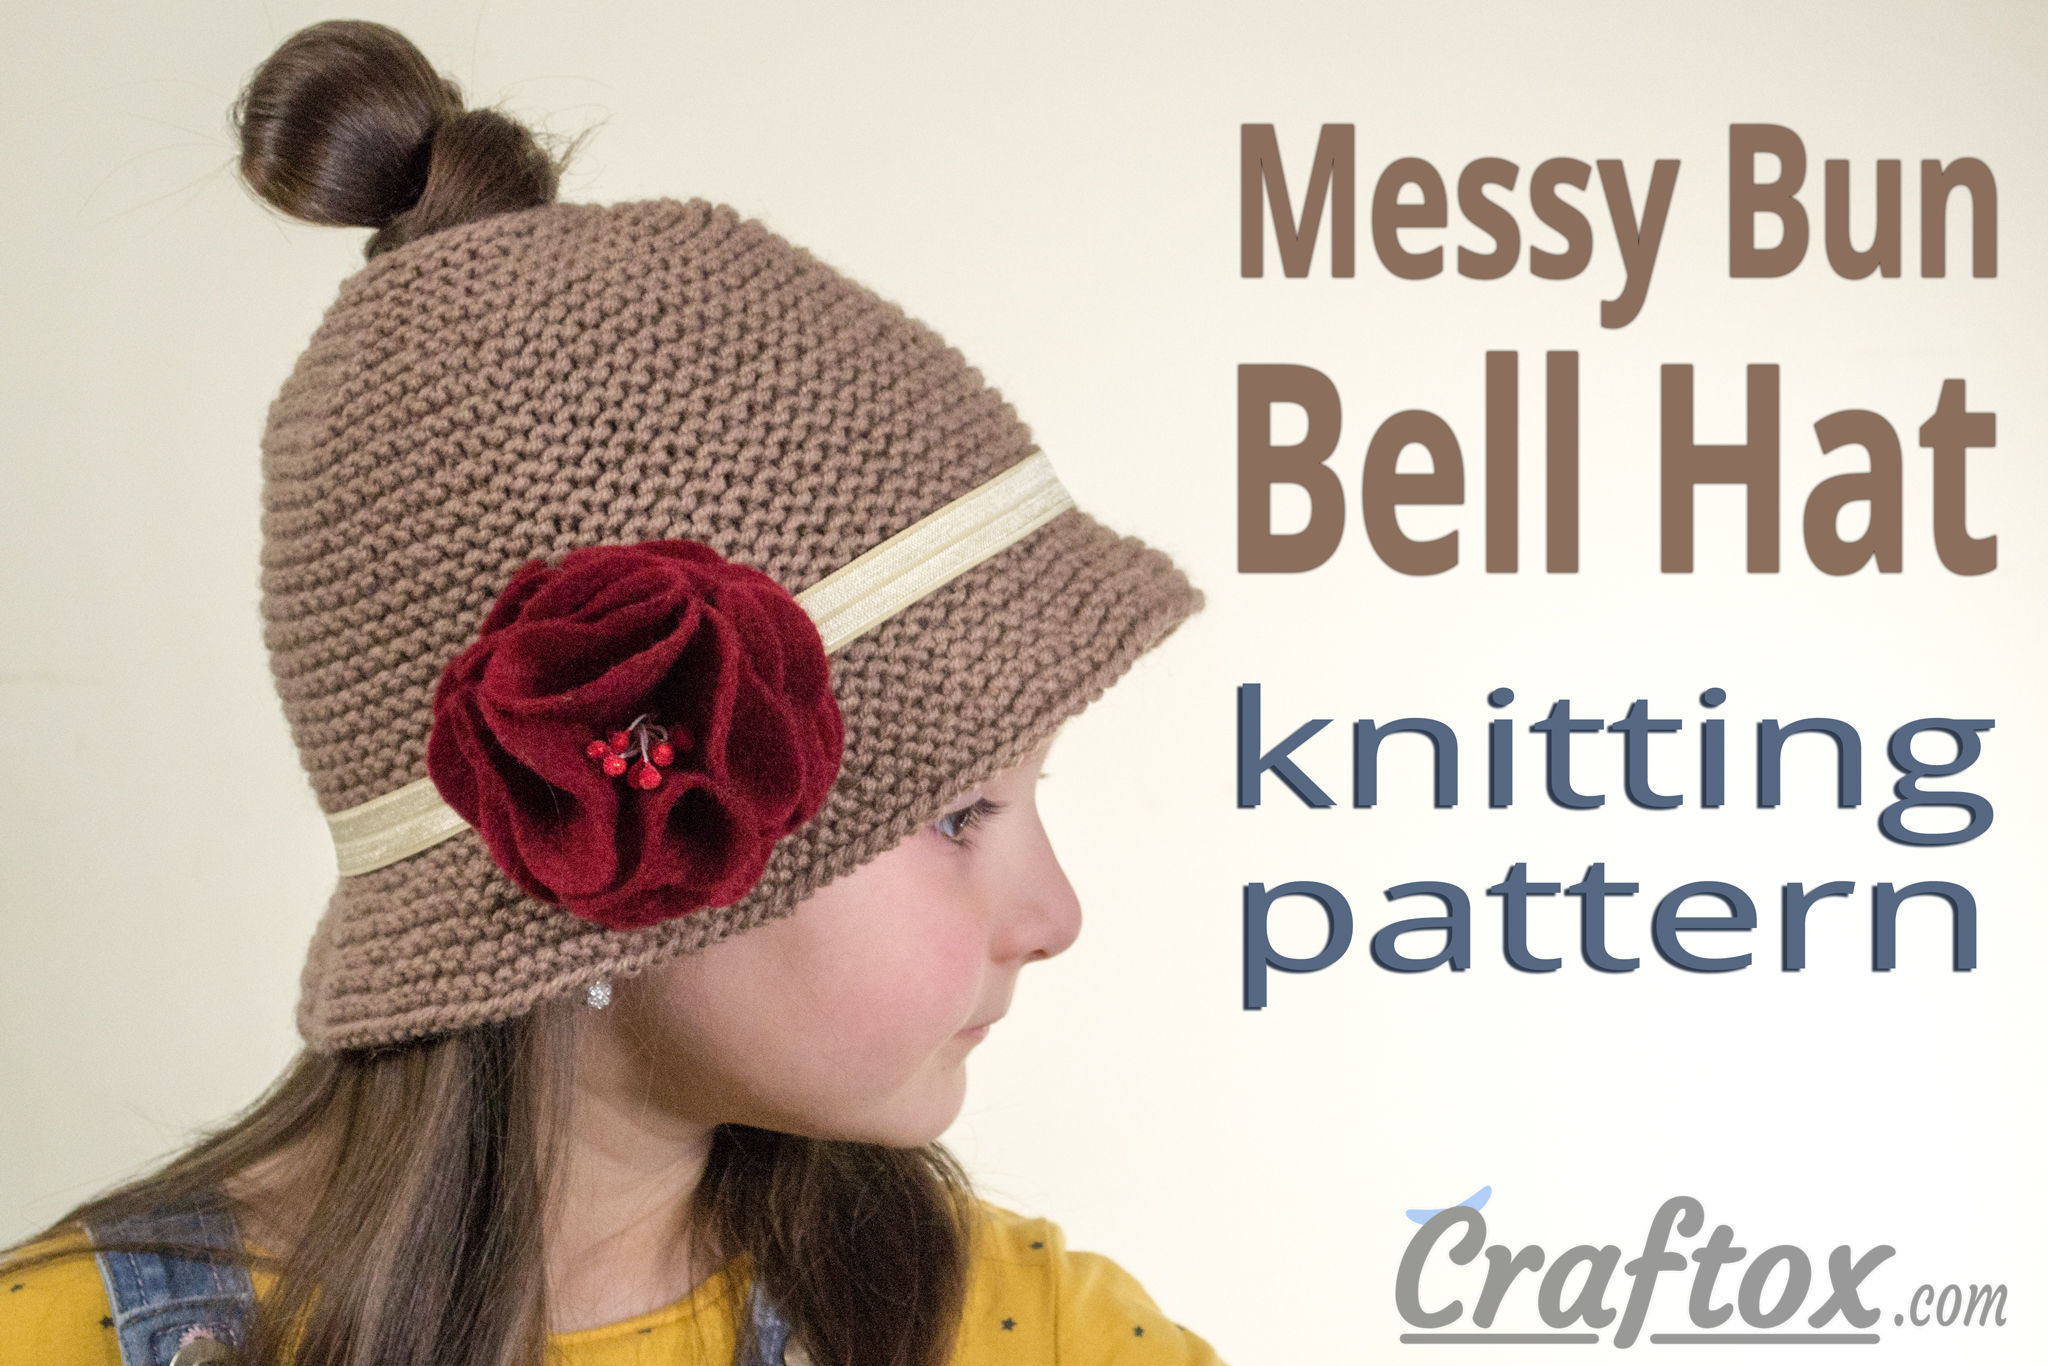 Messy bun Bell hat. Free knitting pattern.